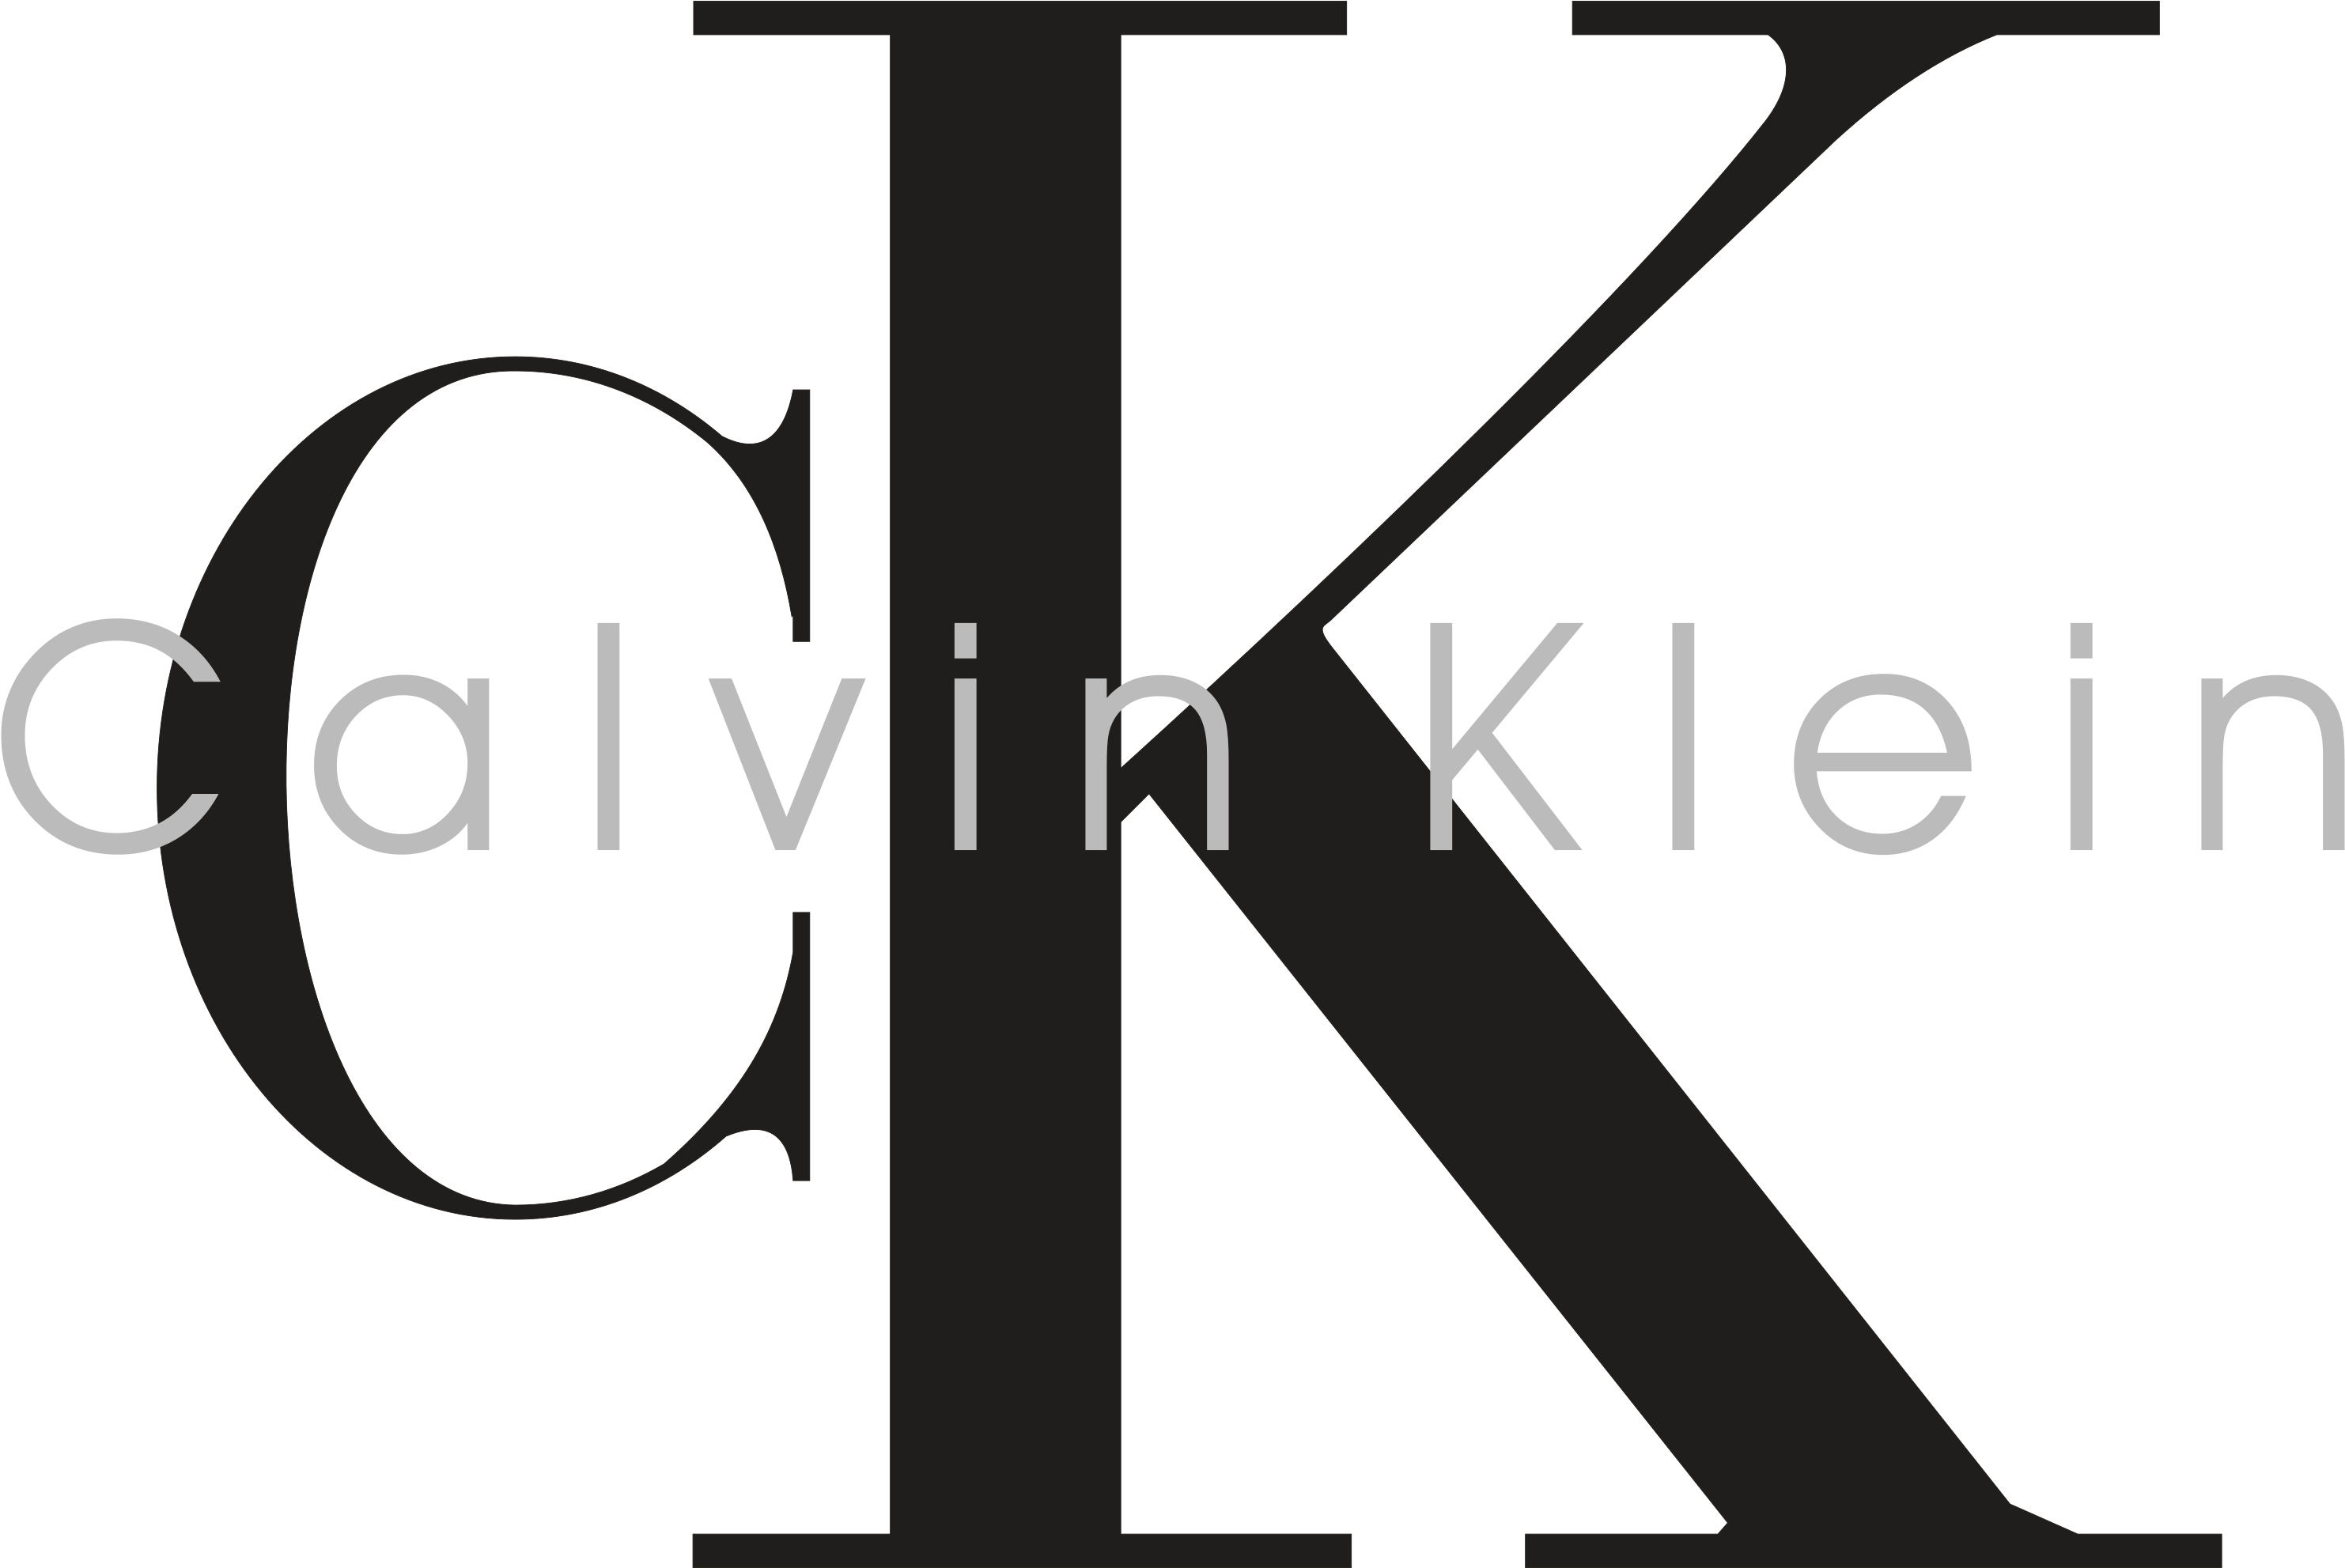 CK كالفين كلاين logo PNG صورة خلفية